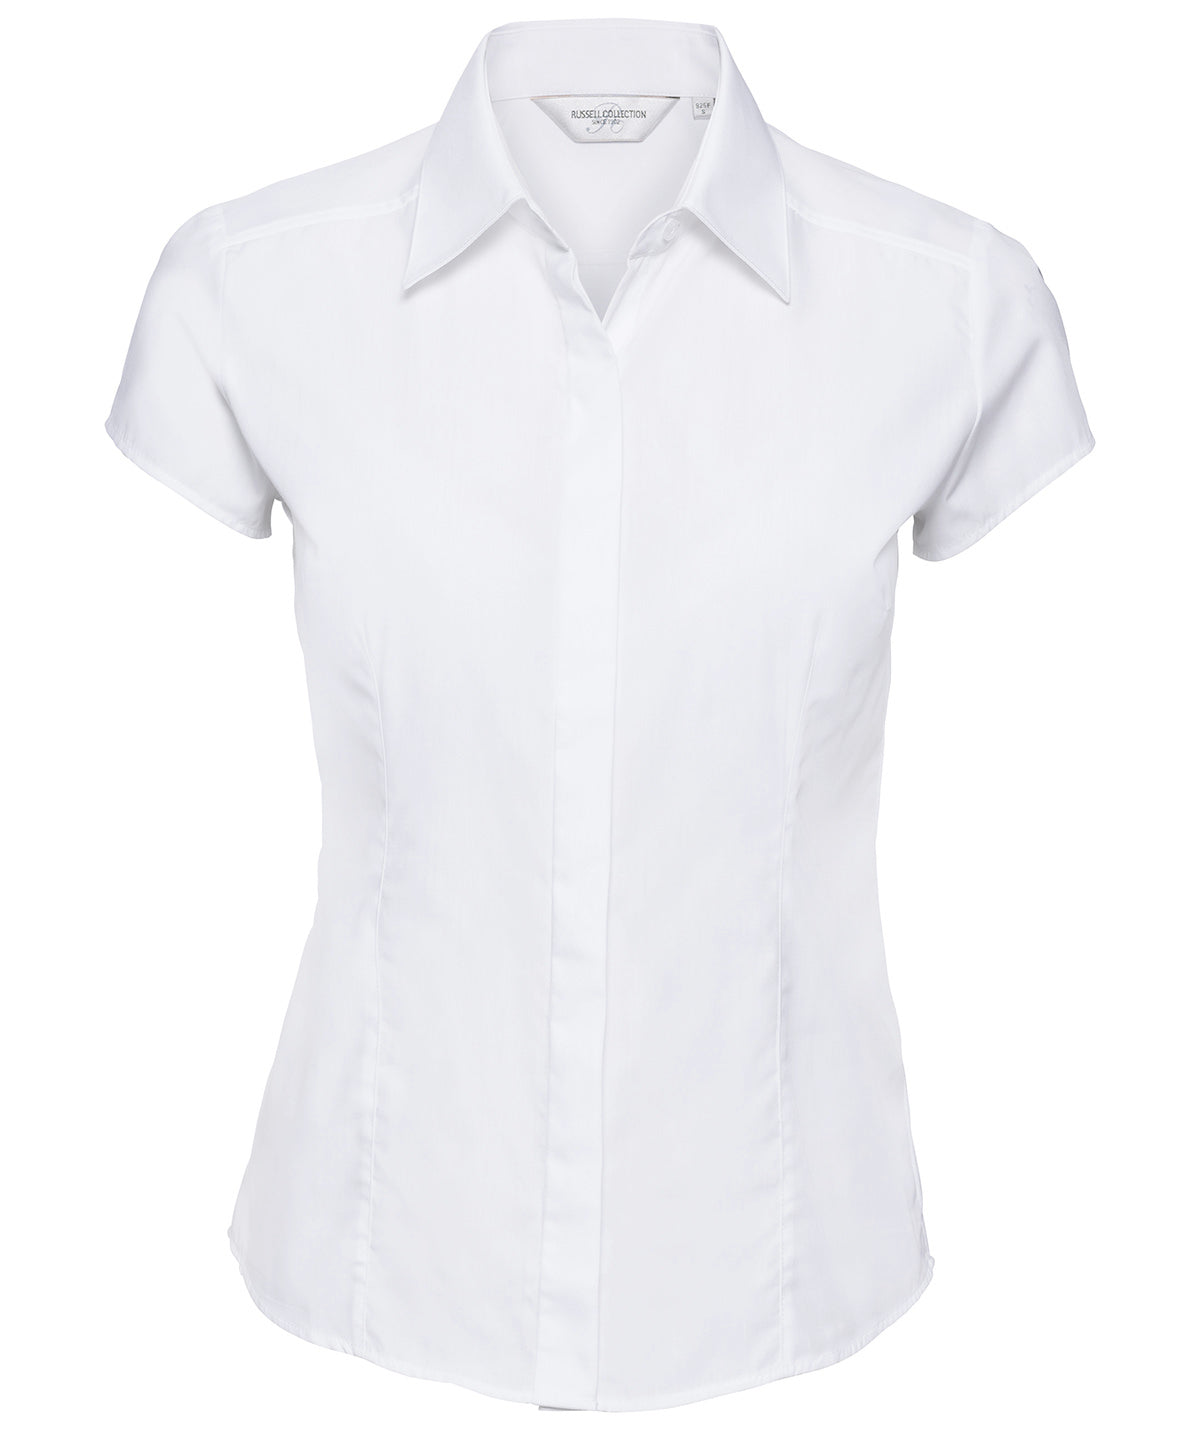 Women's Cap Sleeve Polycotton Easycare Fitted Poplin Shirt